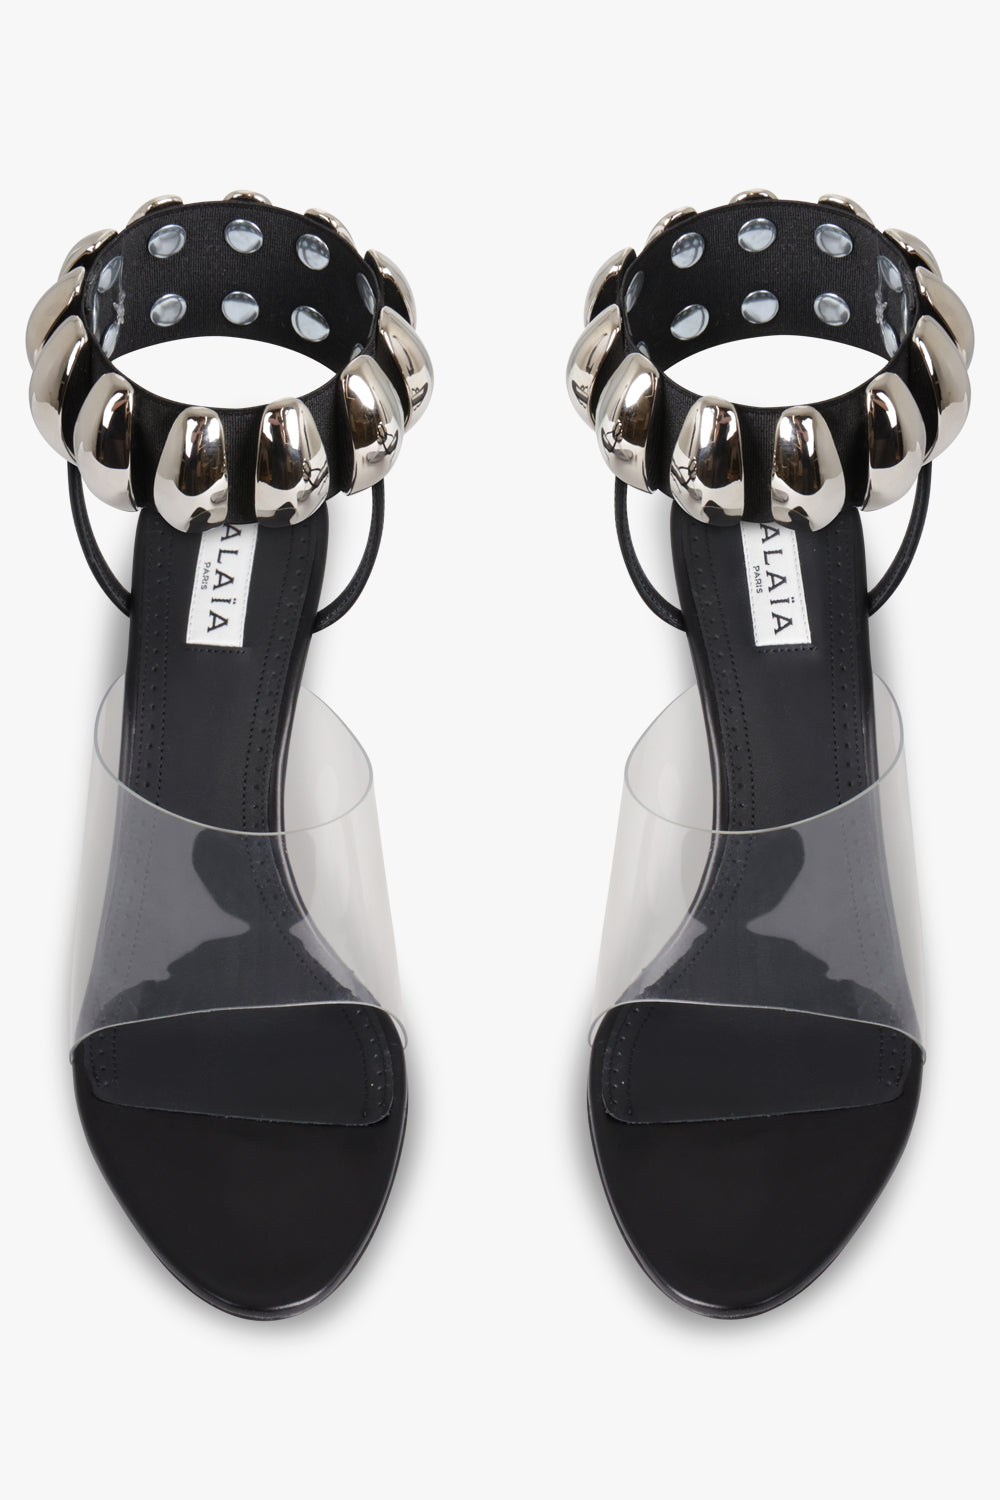 ALAIA SHOES Heeled Sandals 90Mm | Black